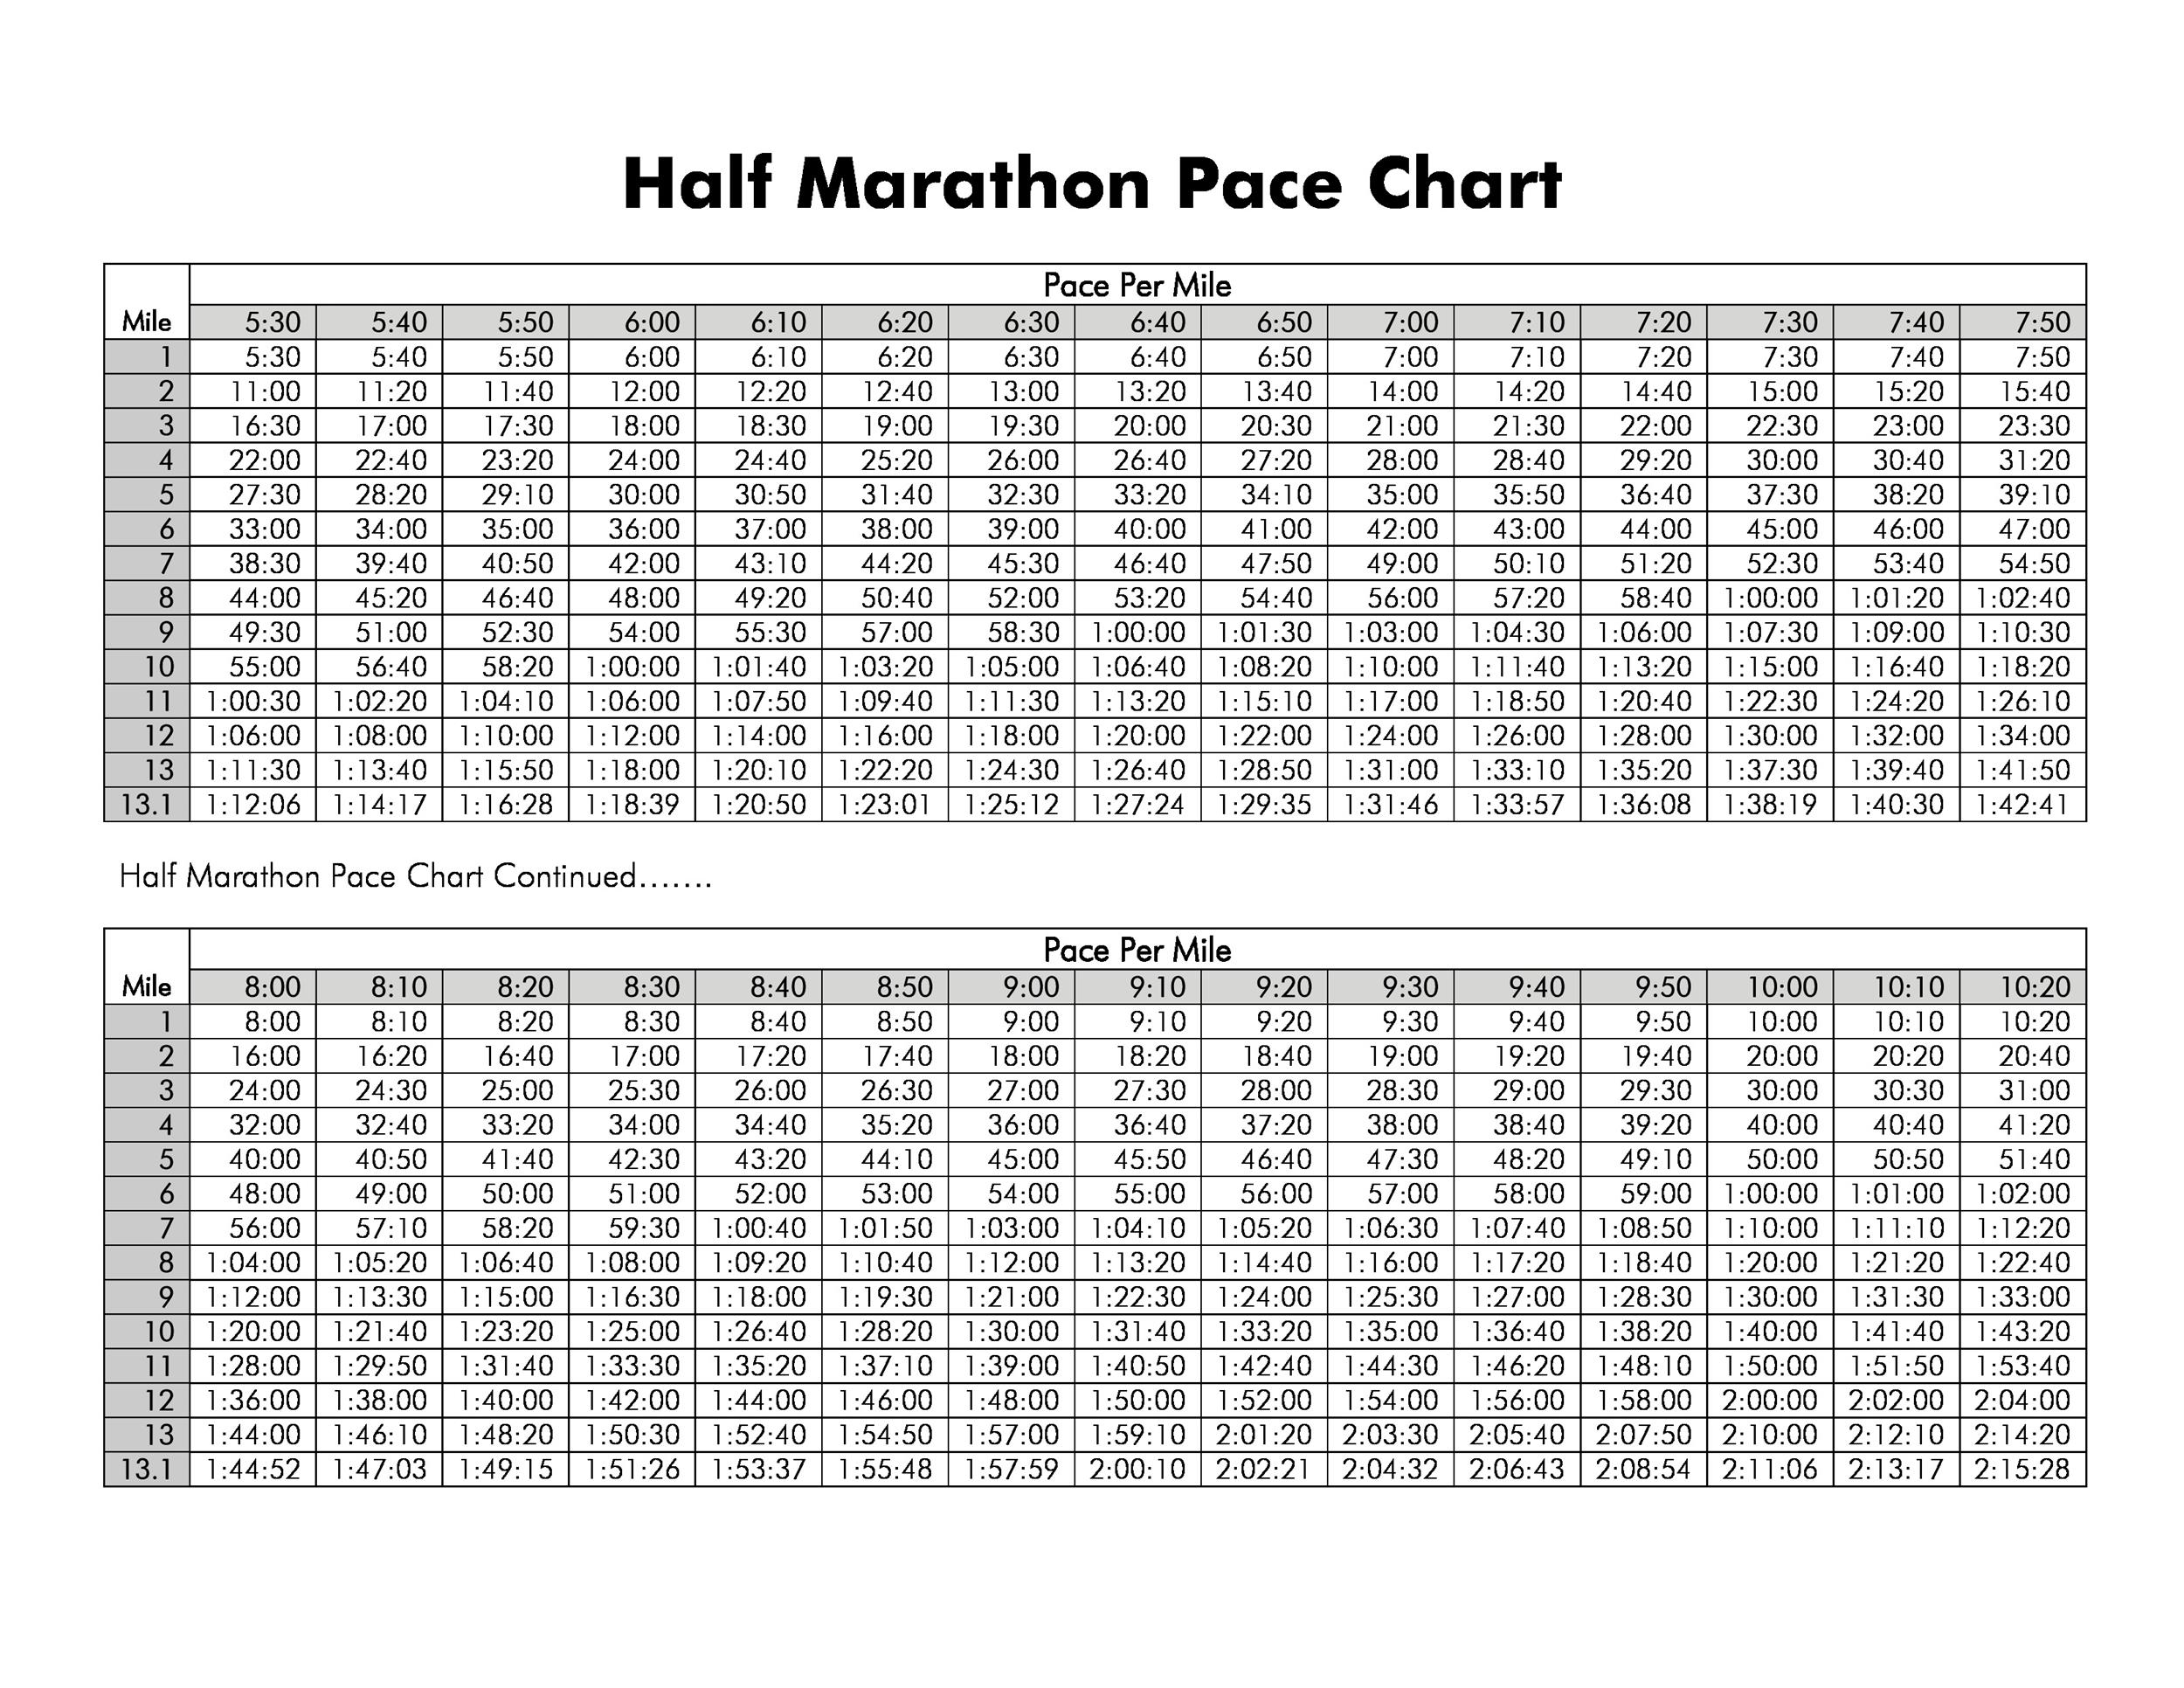 Half Marathon Split Chart